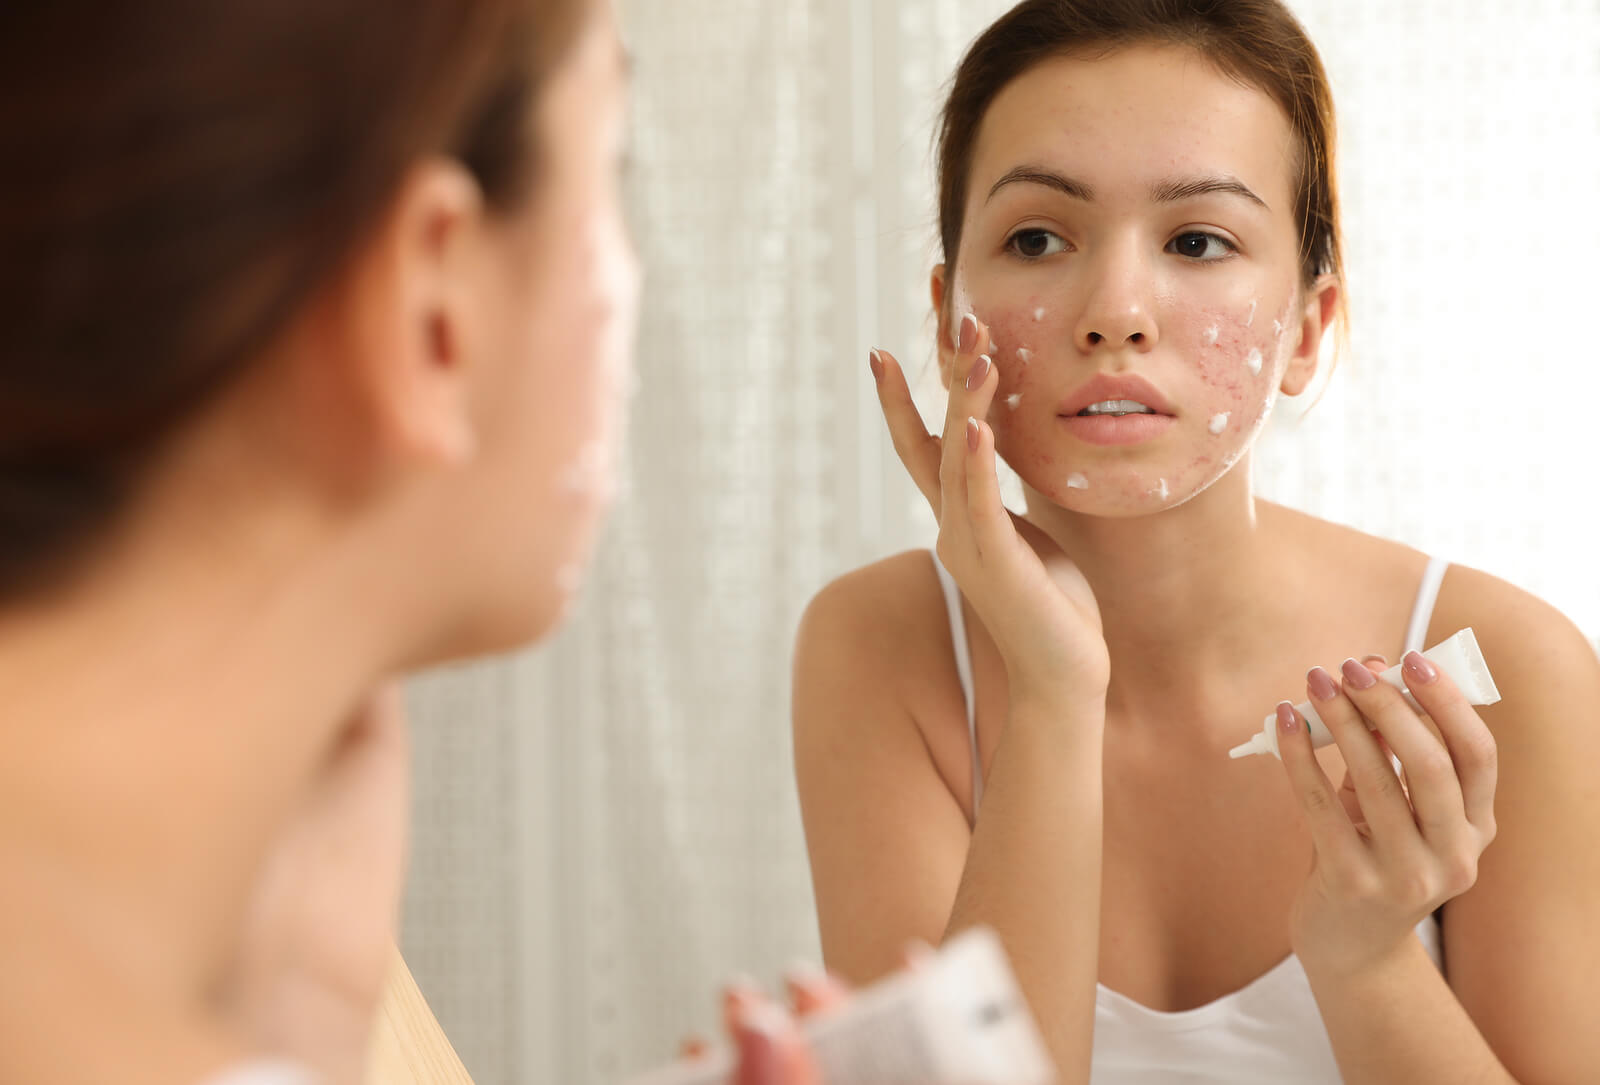 Mild acne has multiple treatments